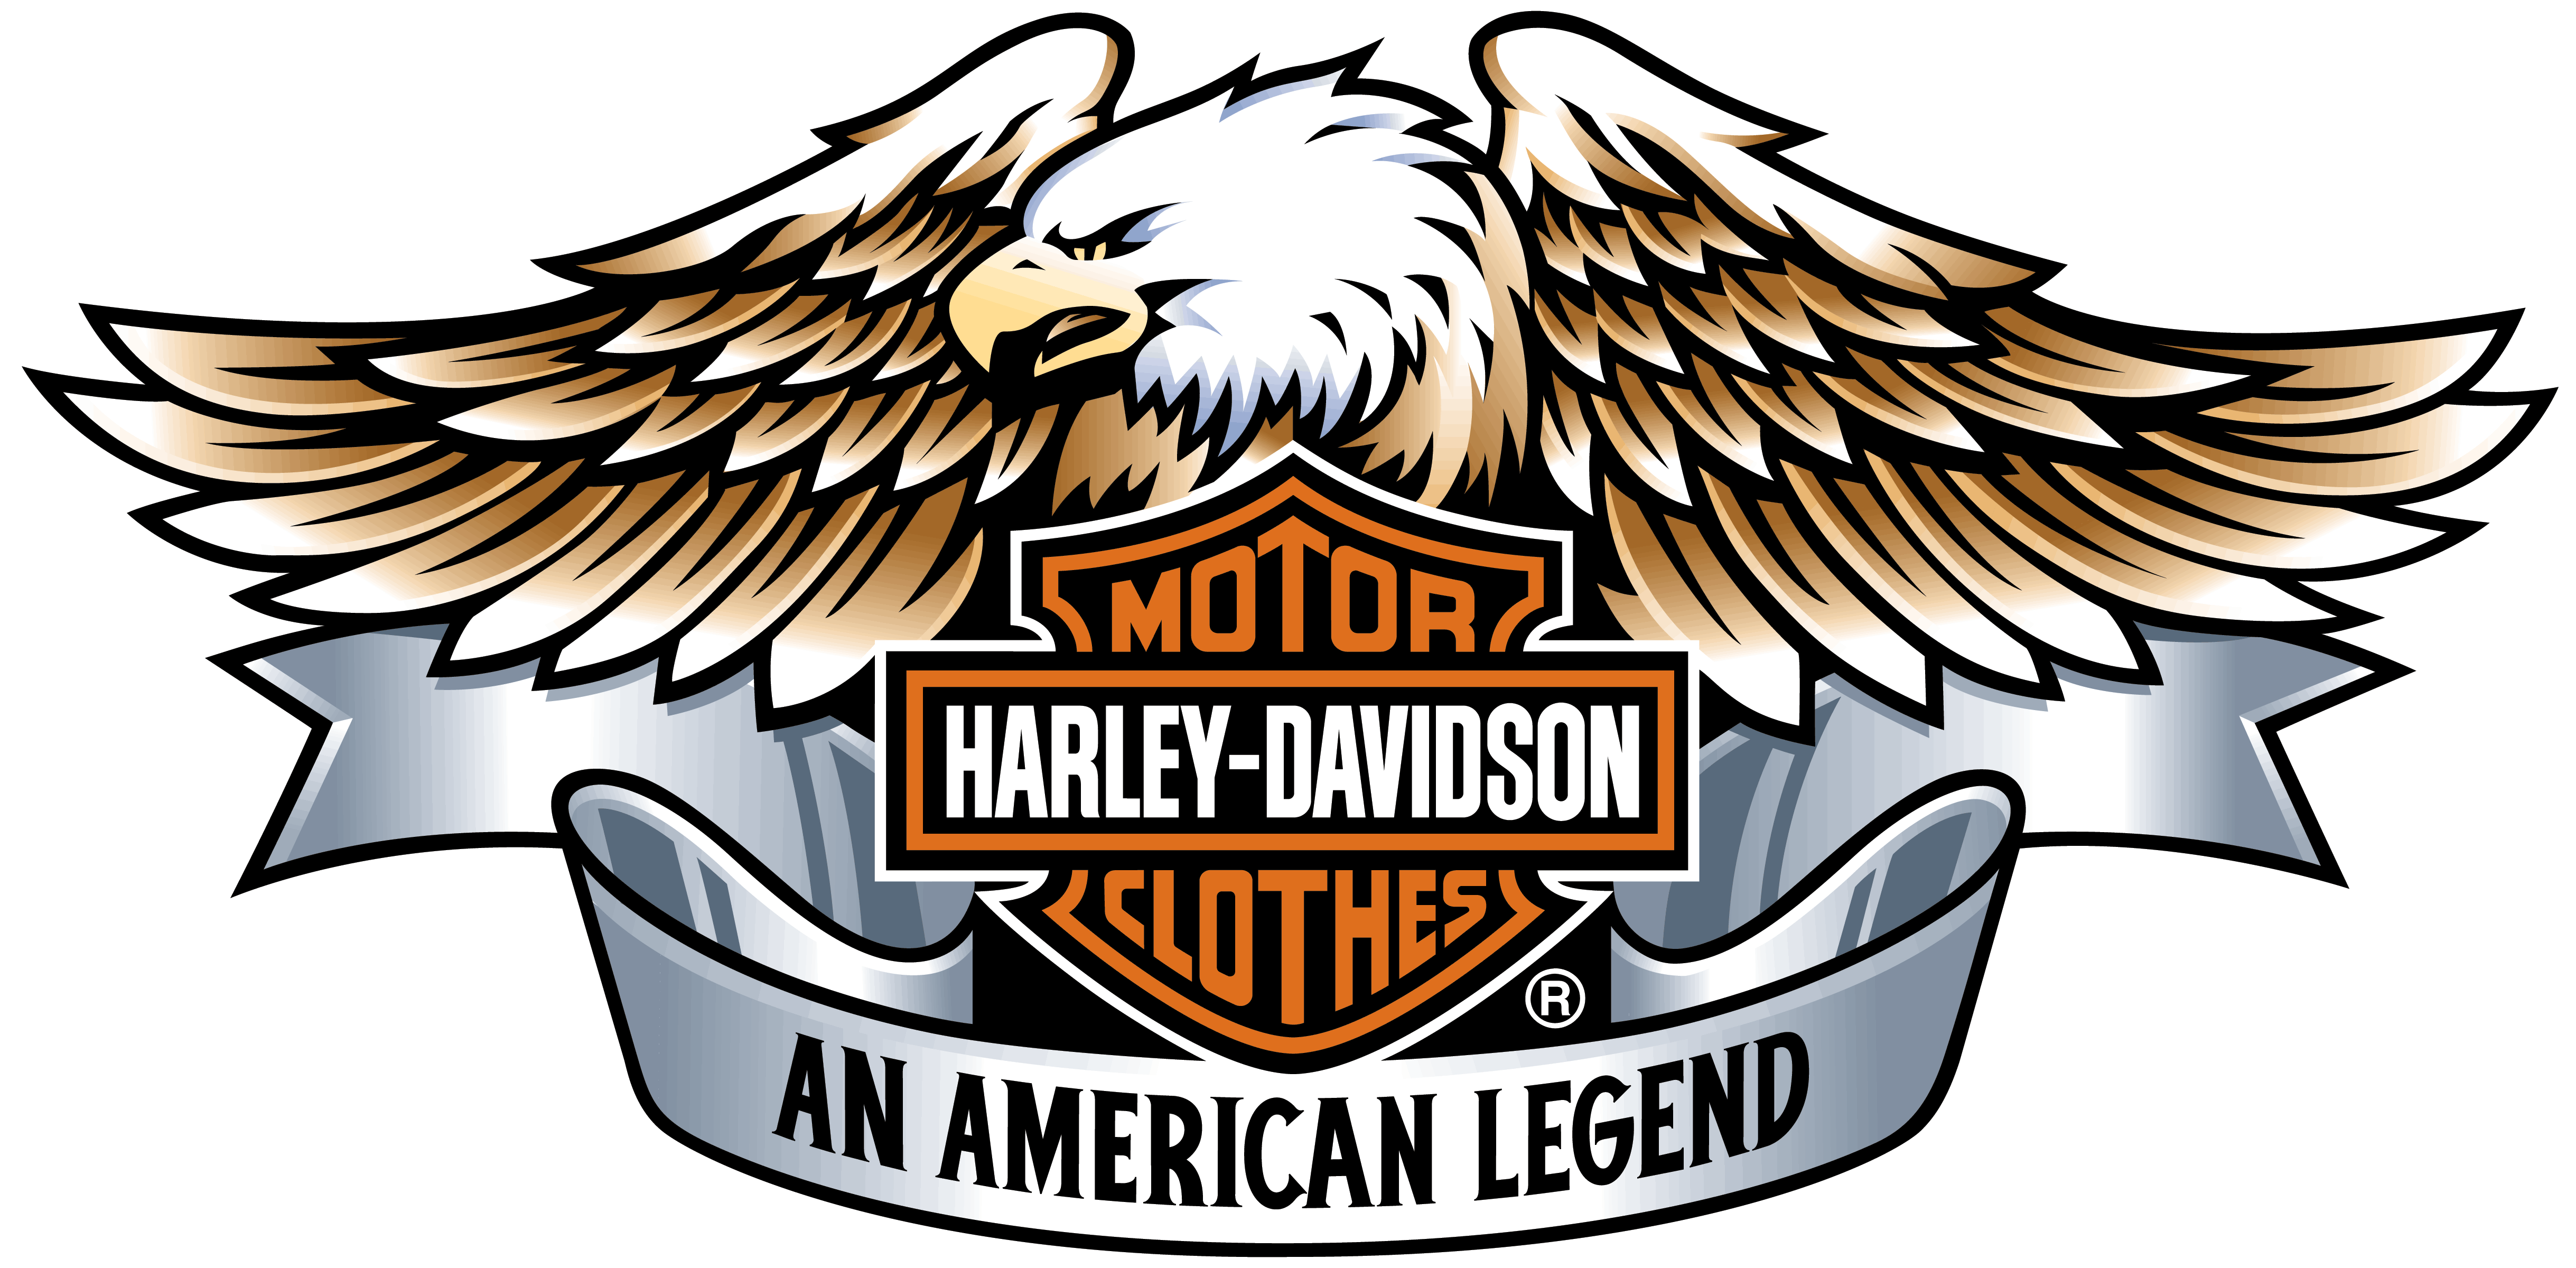 Harley Davidson Flames Clip Art 1000 X 316 204 Kb Jpeg | Top ...